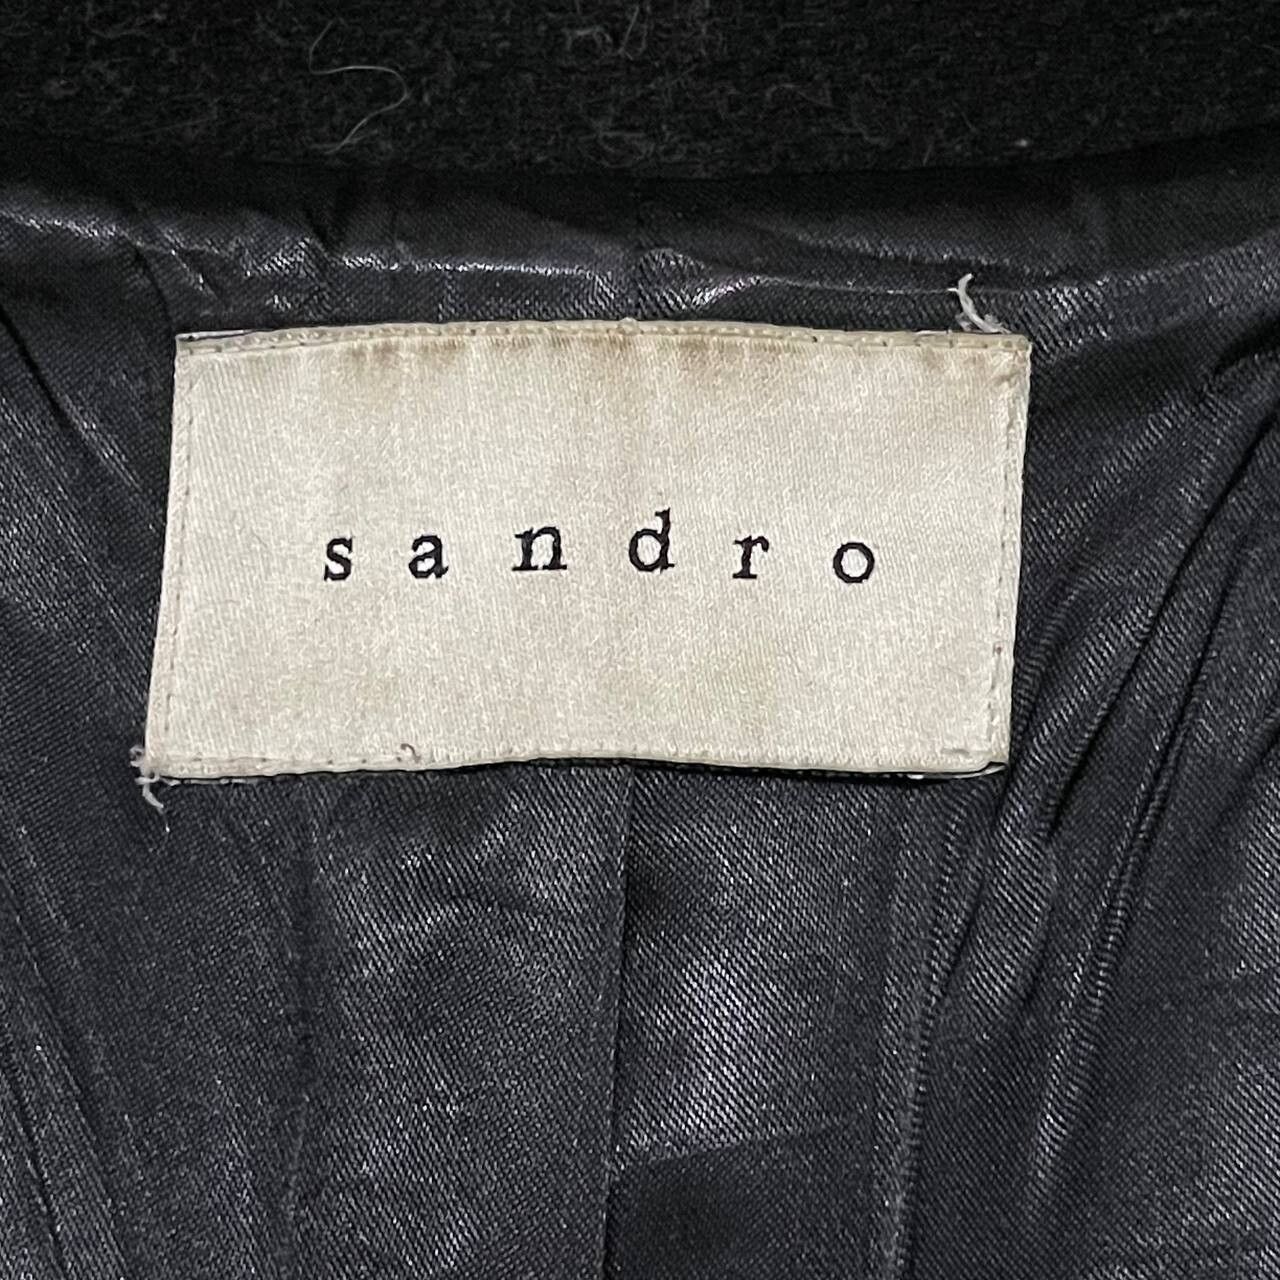 Sandro Paris Fur Wool Hooded Coat - 10